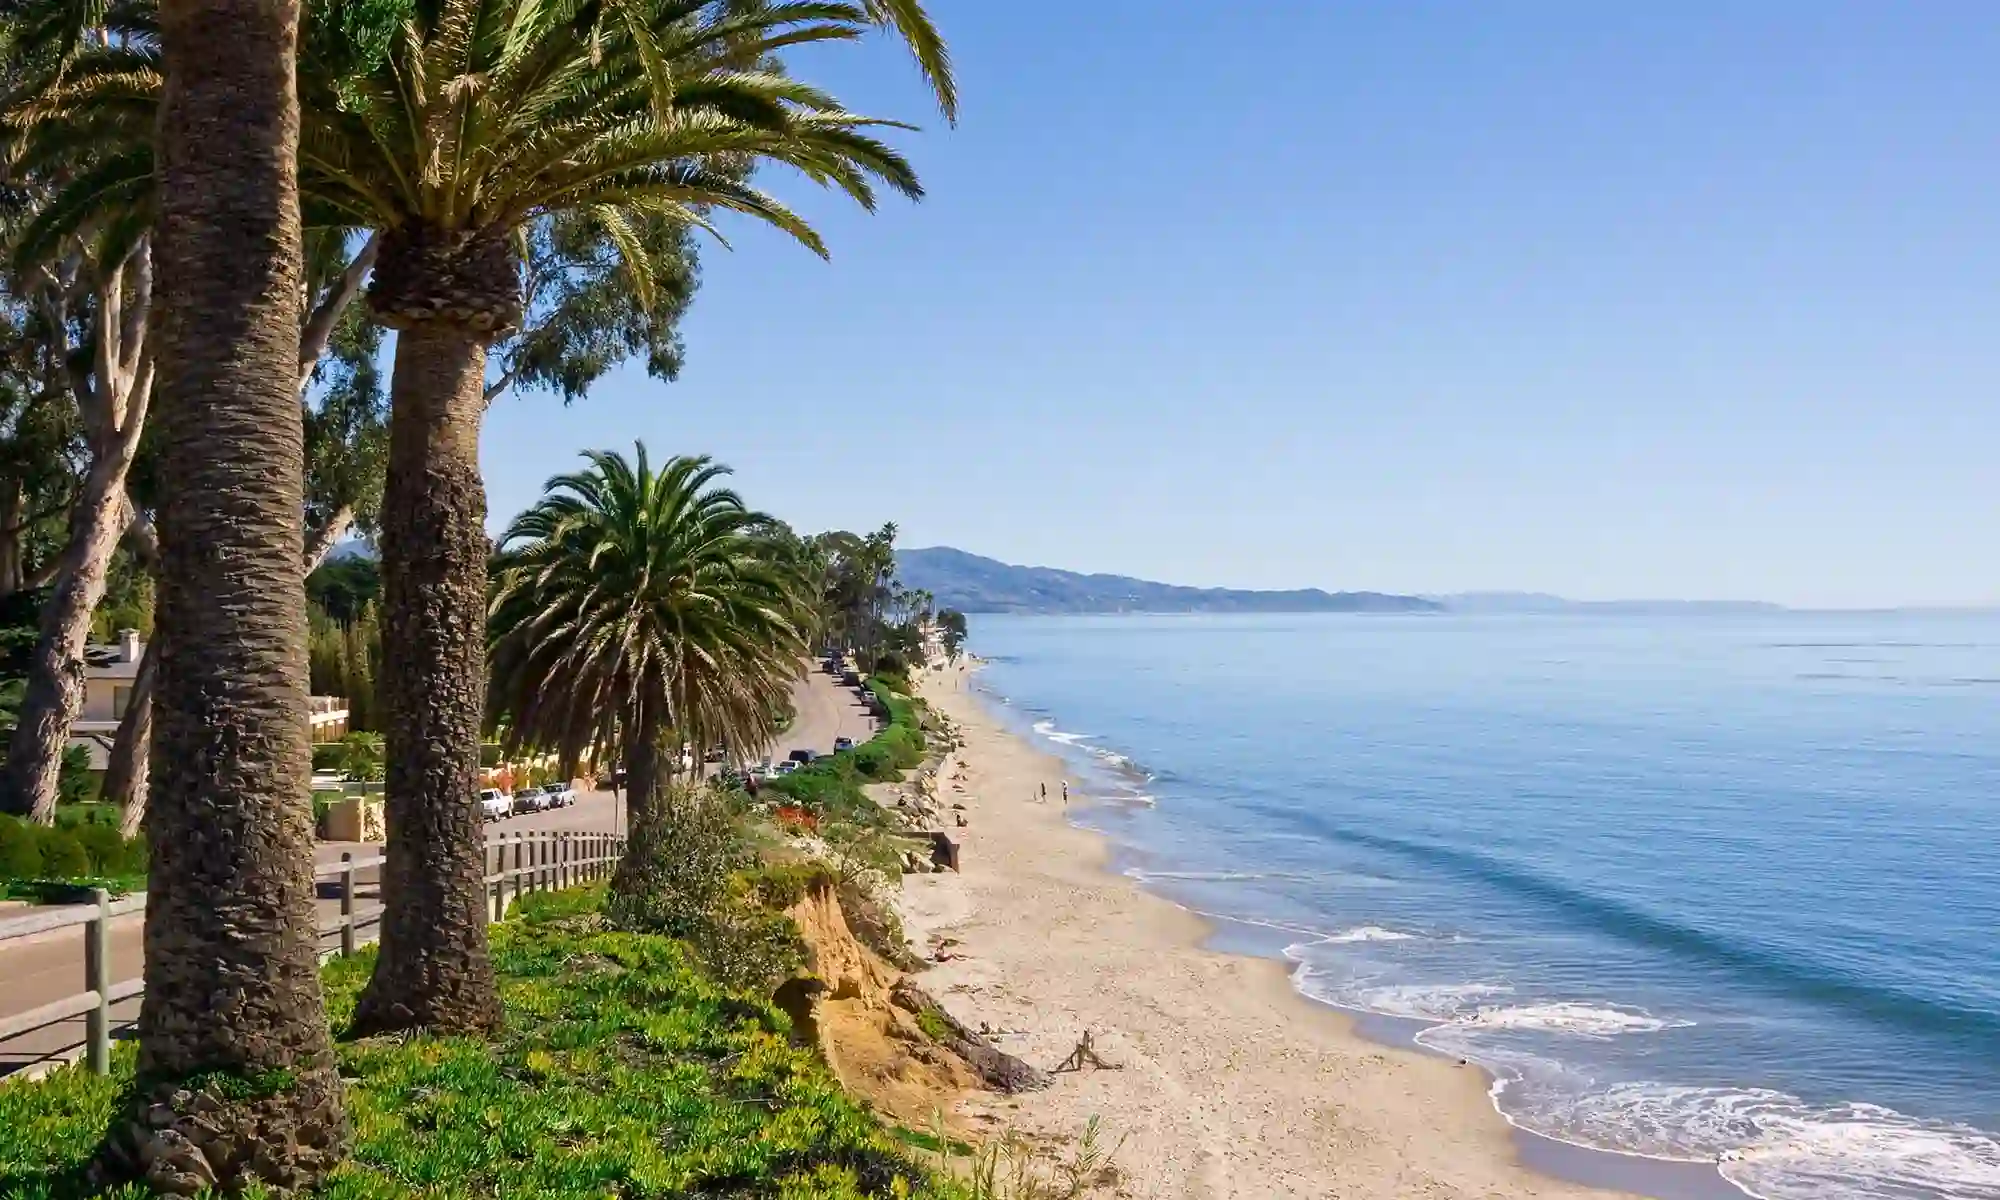 Santa Barbara beaches